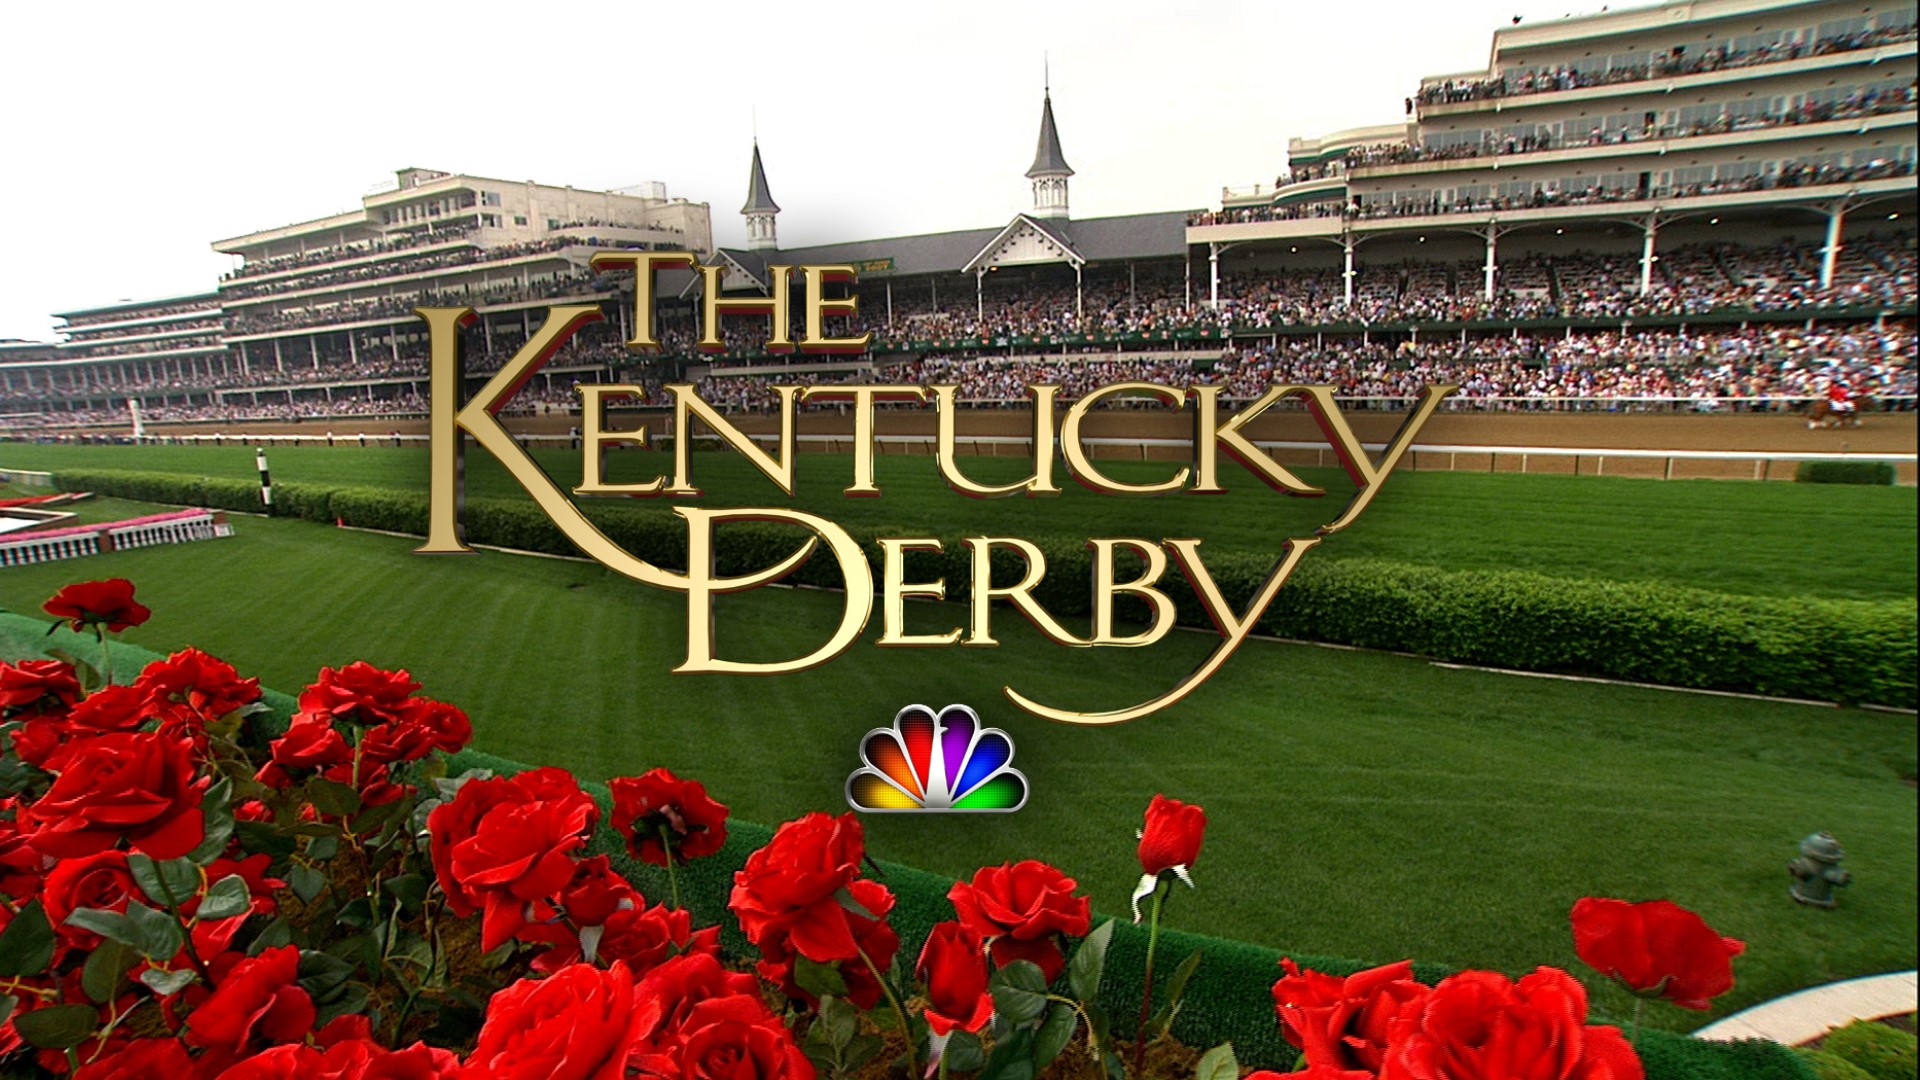 Kentucky Derby 2019 watch parties across Denver and Colorado